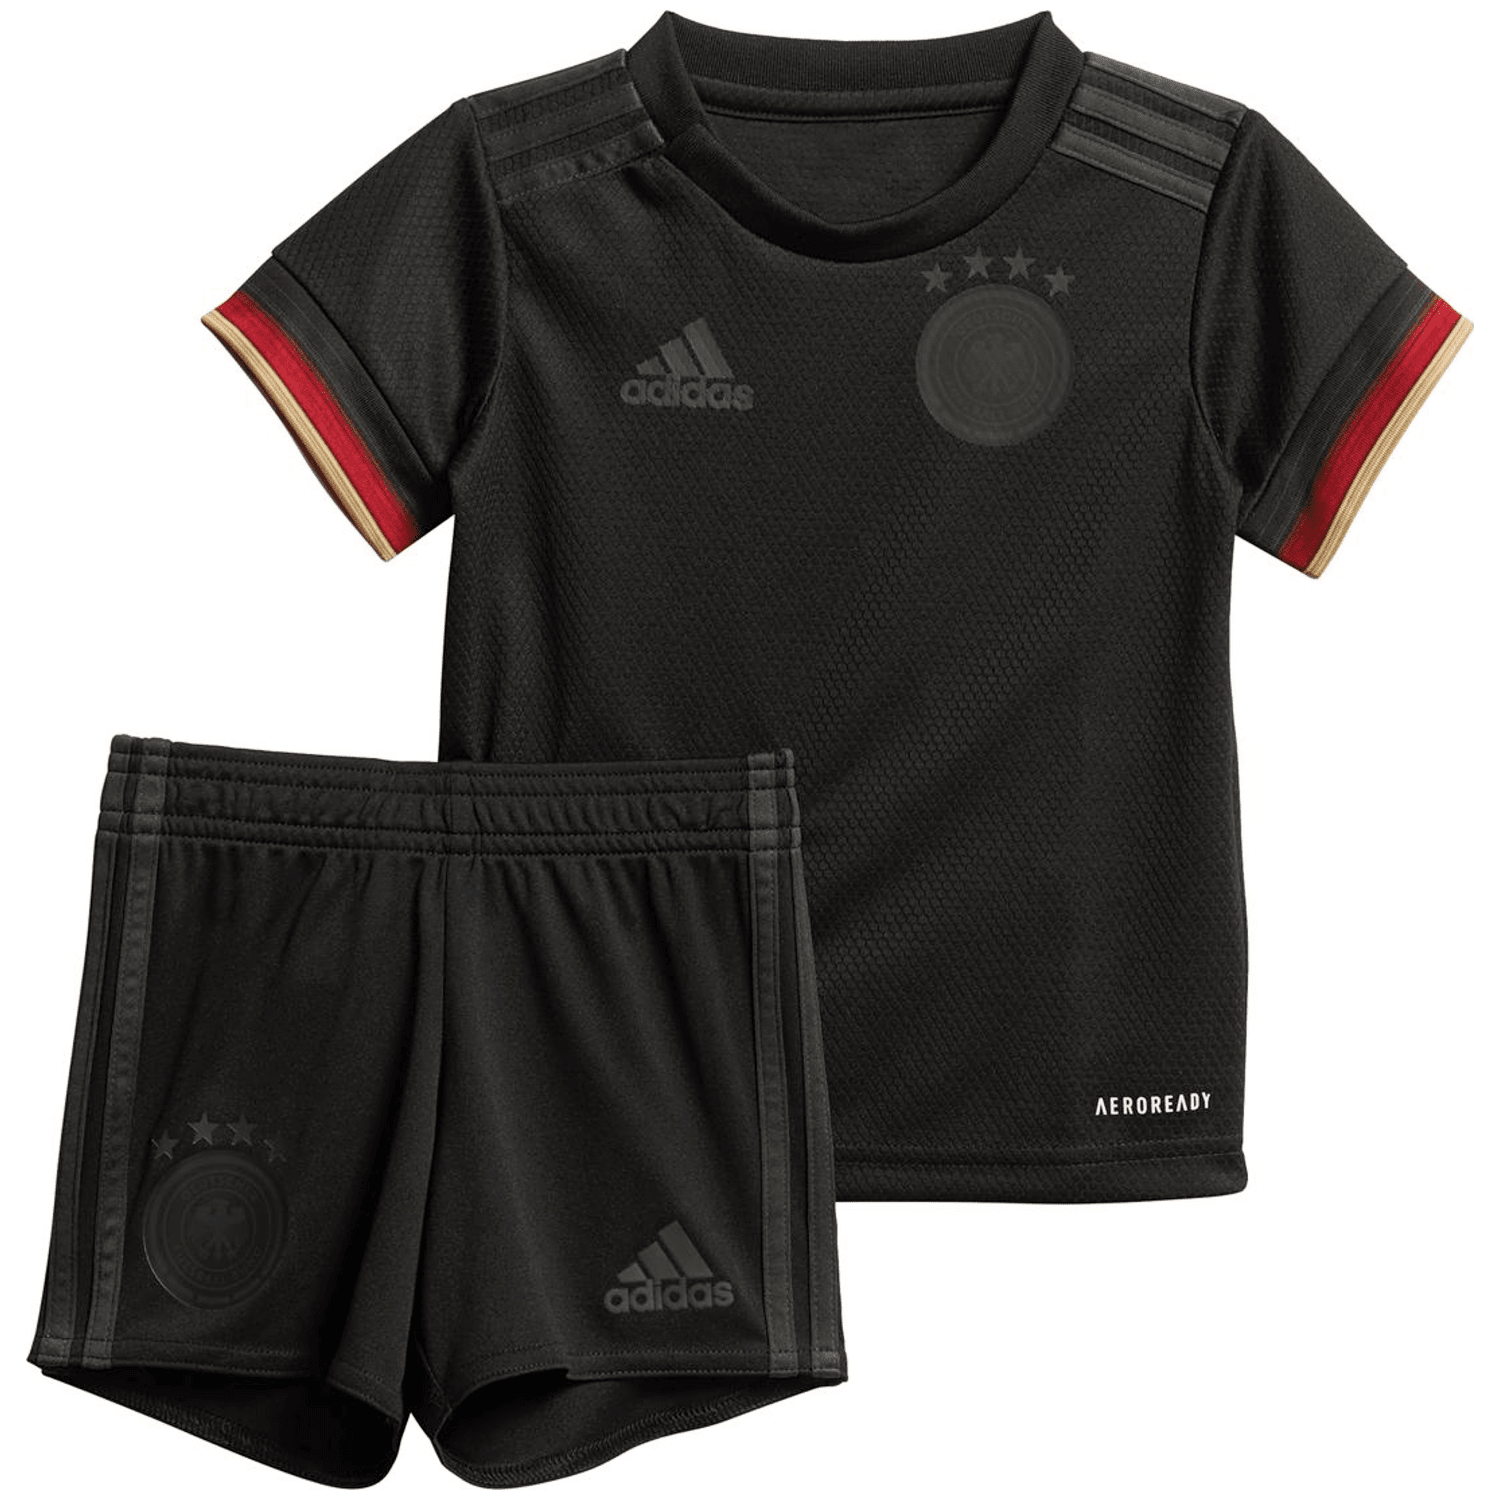 Adidas DFB Mini-Auswärtsausrüstung Kinder